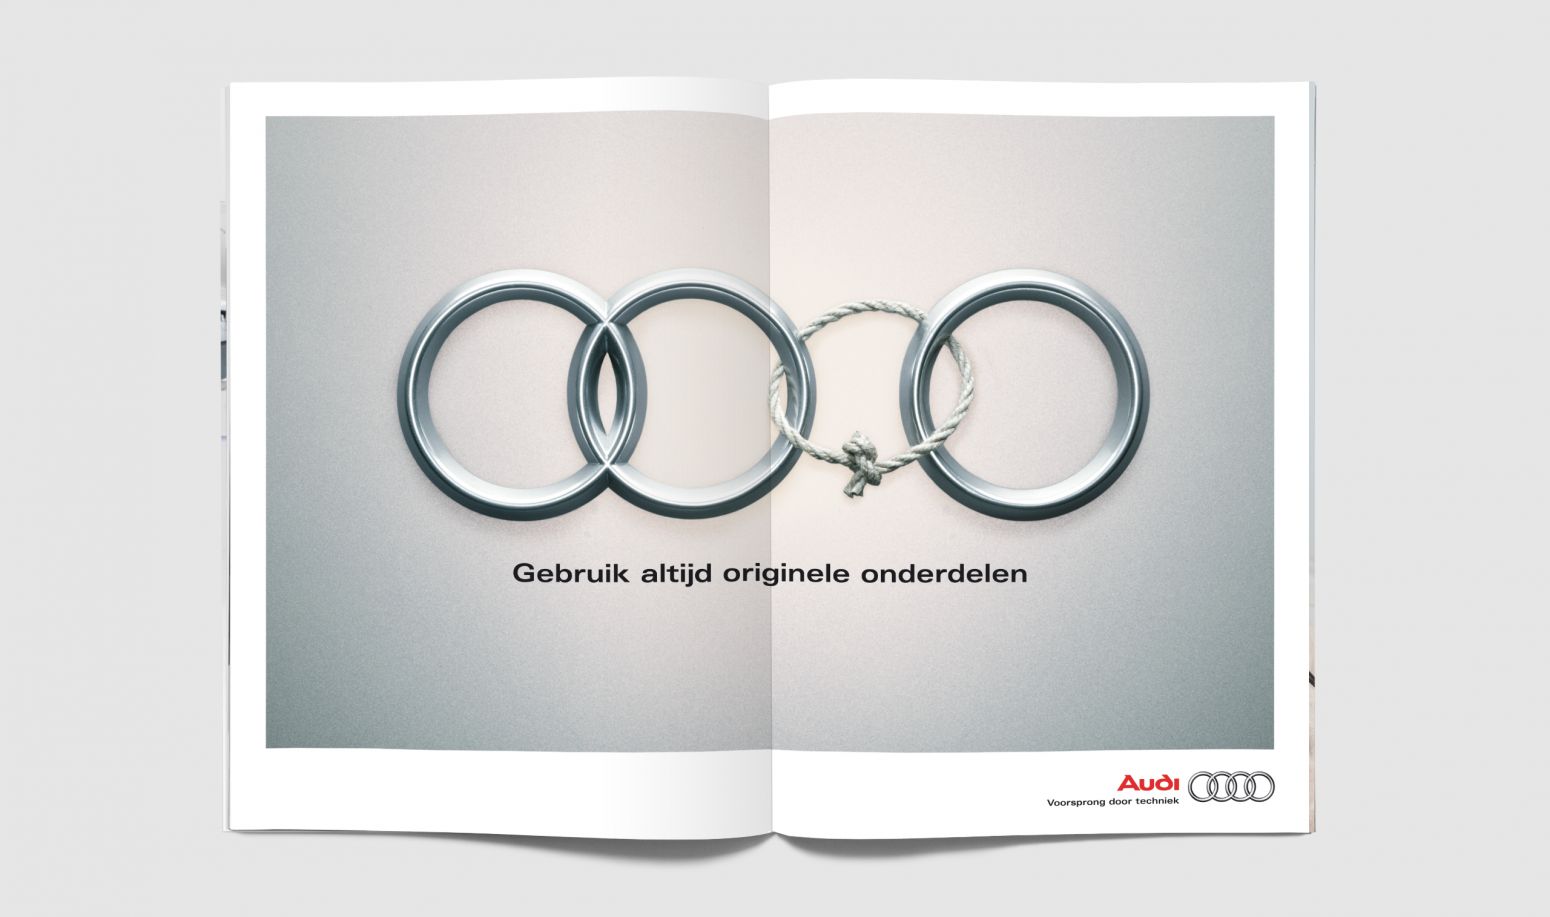 Audi Service & Parts - AGH & Friends